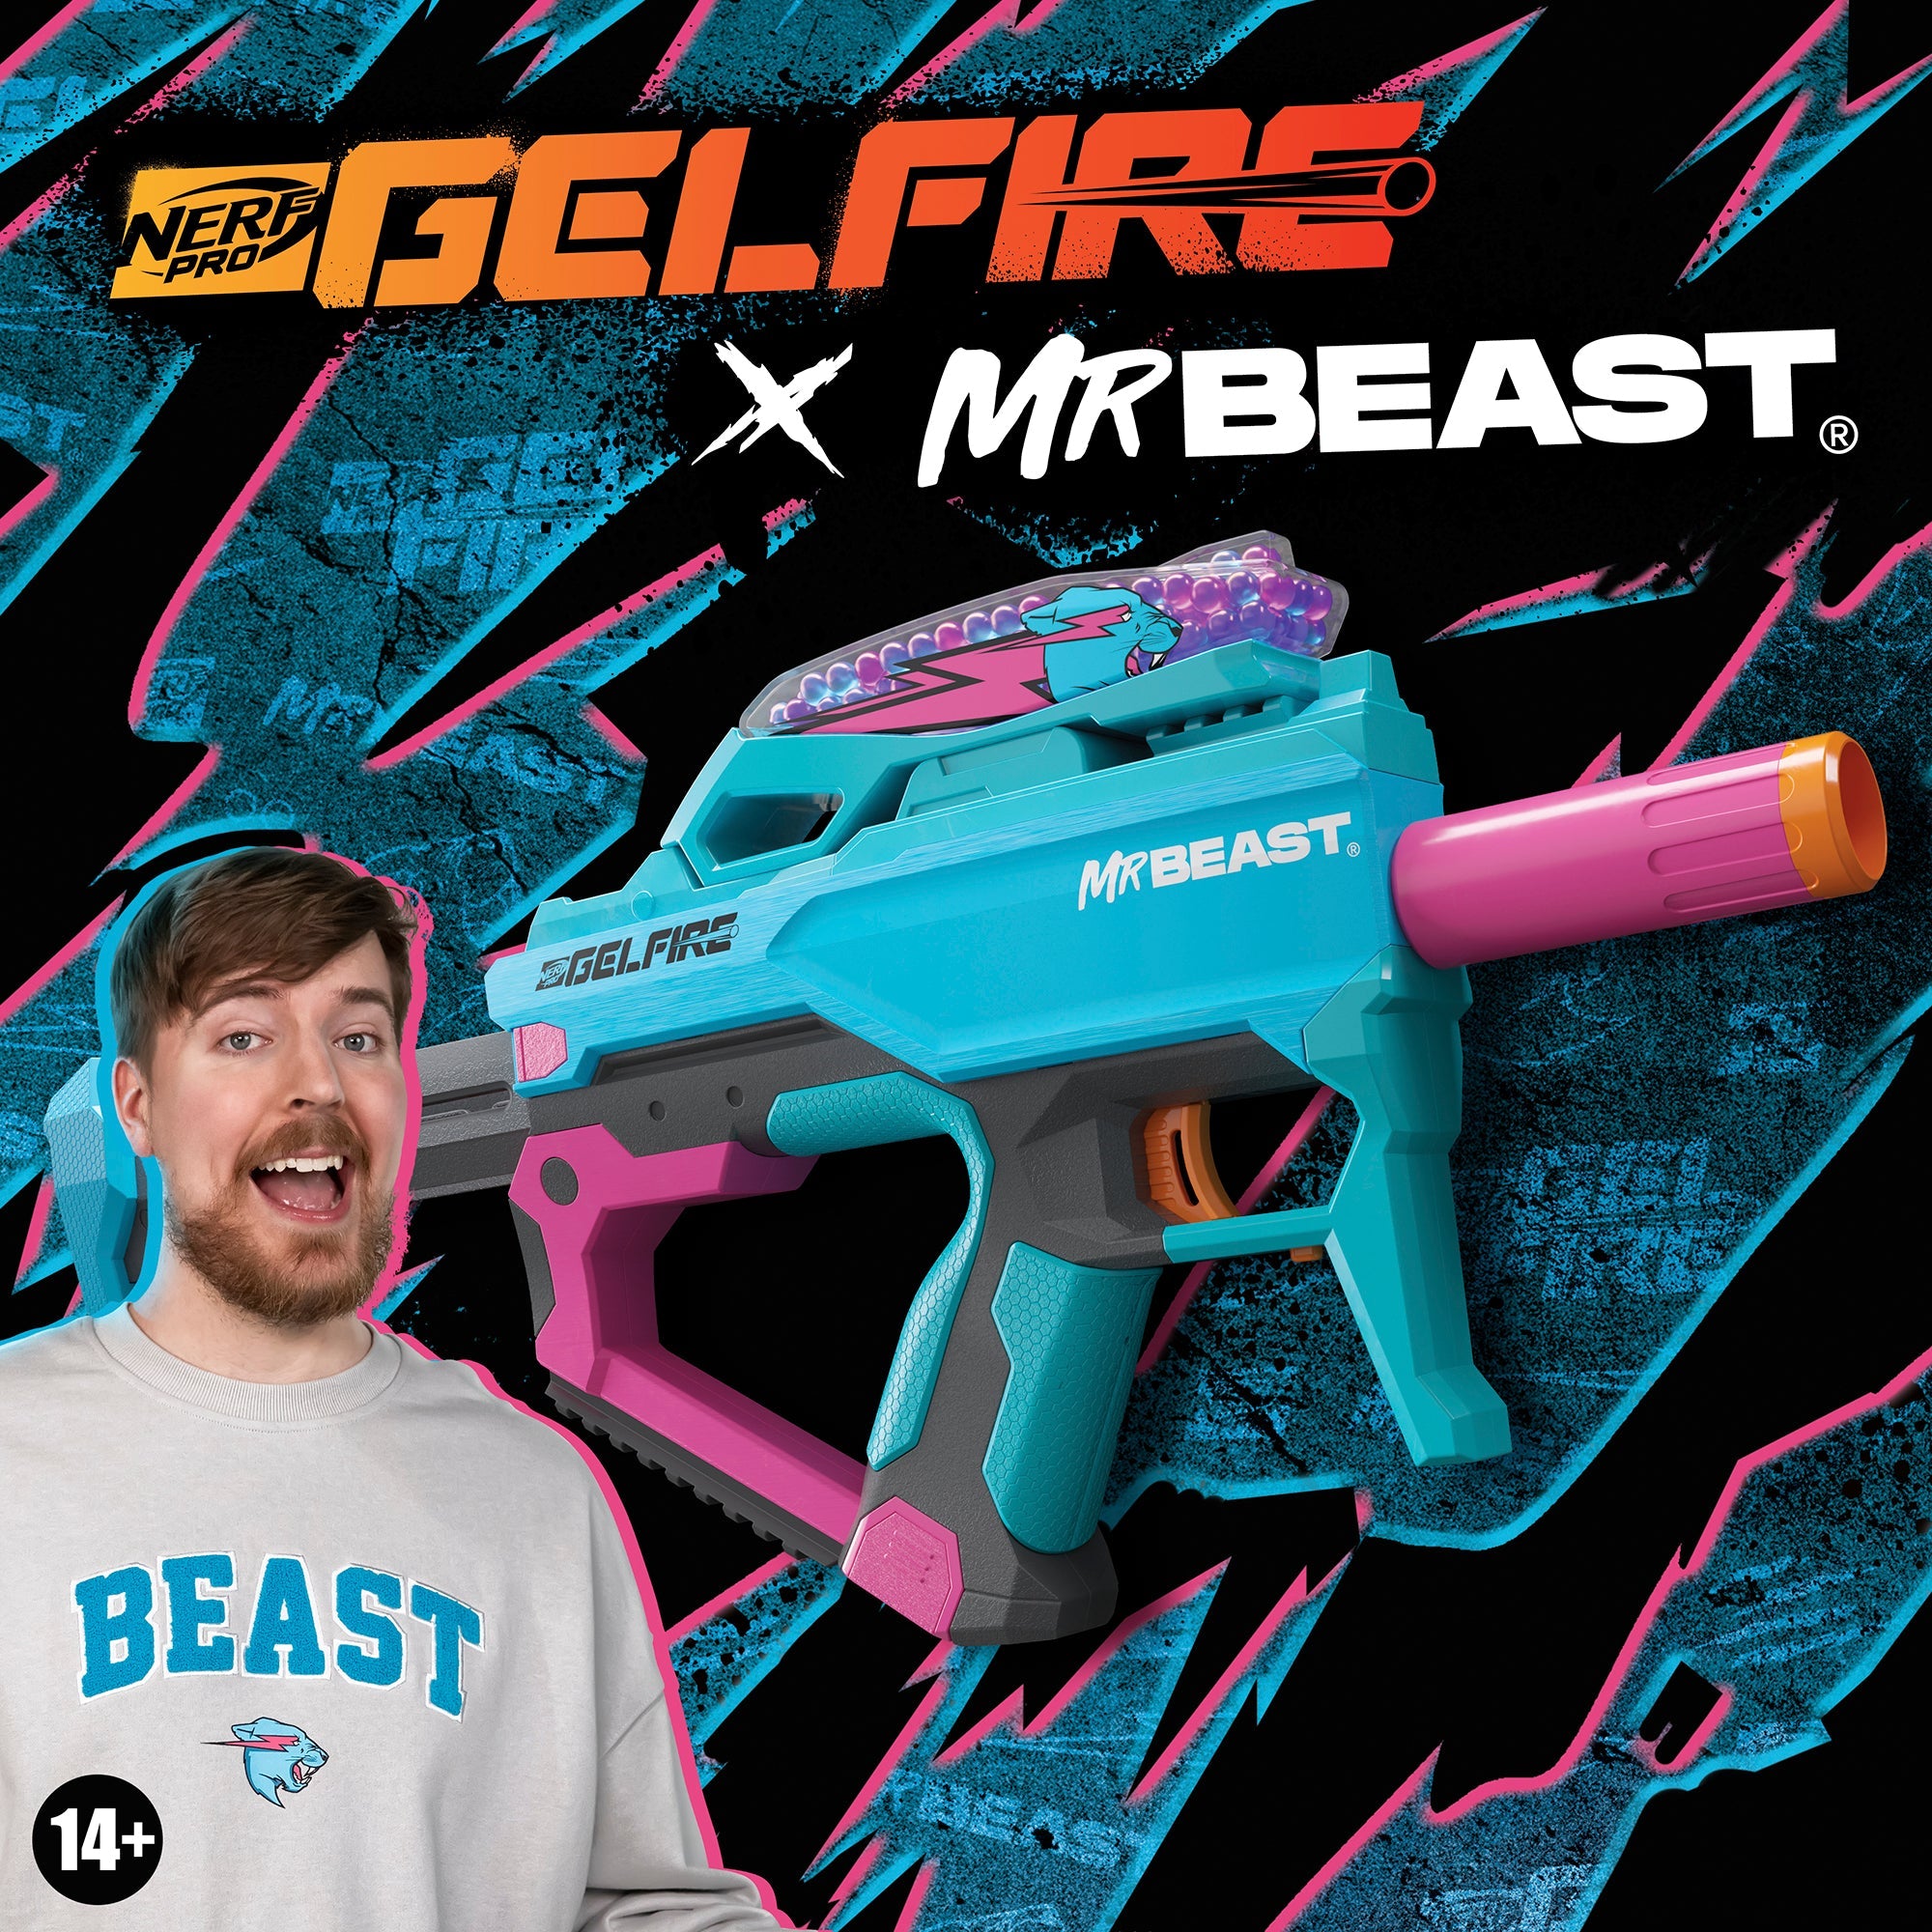 Hasbro Introduces the NERF Gelfire Gel Blaster